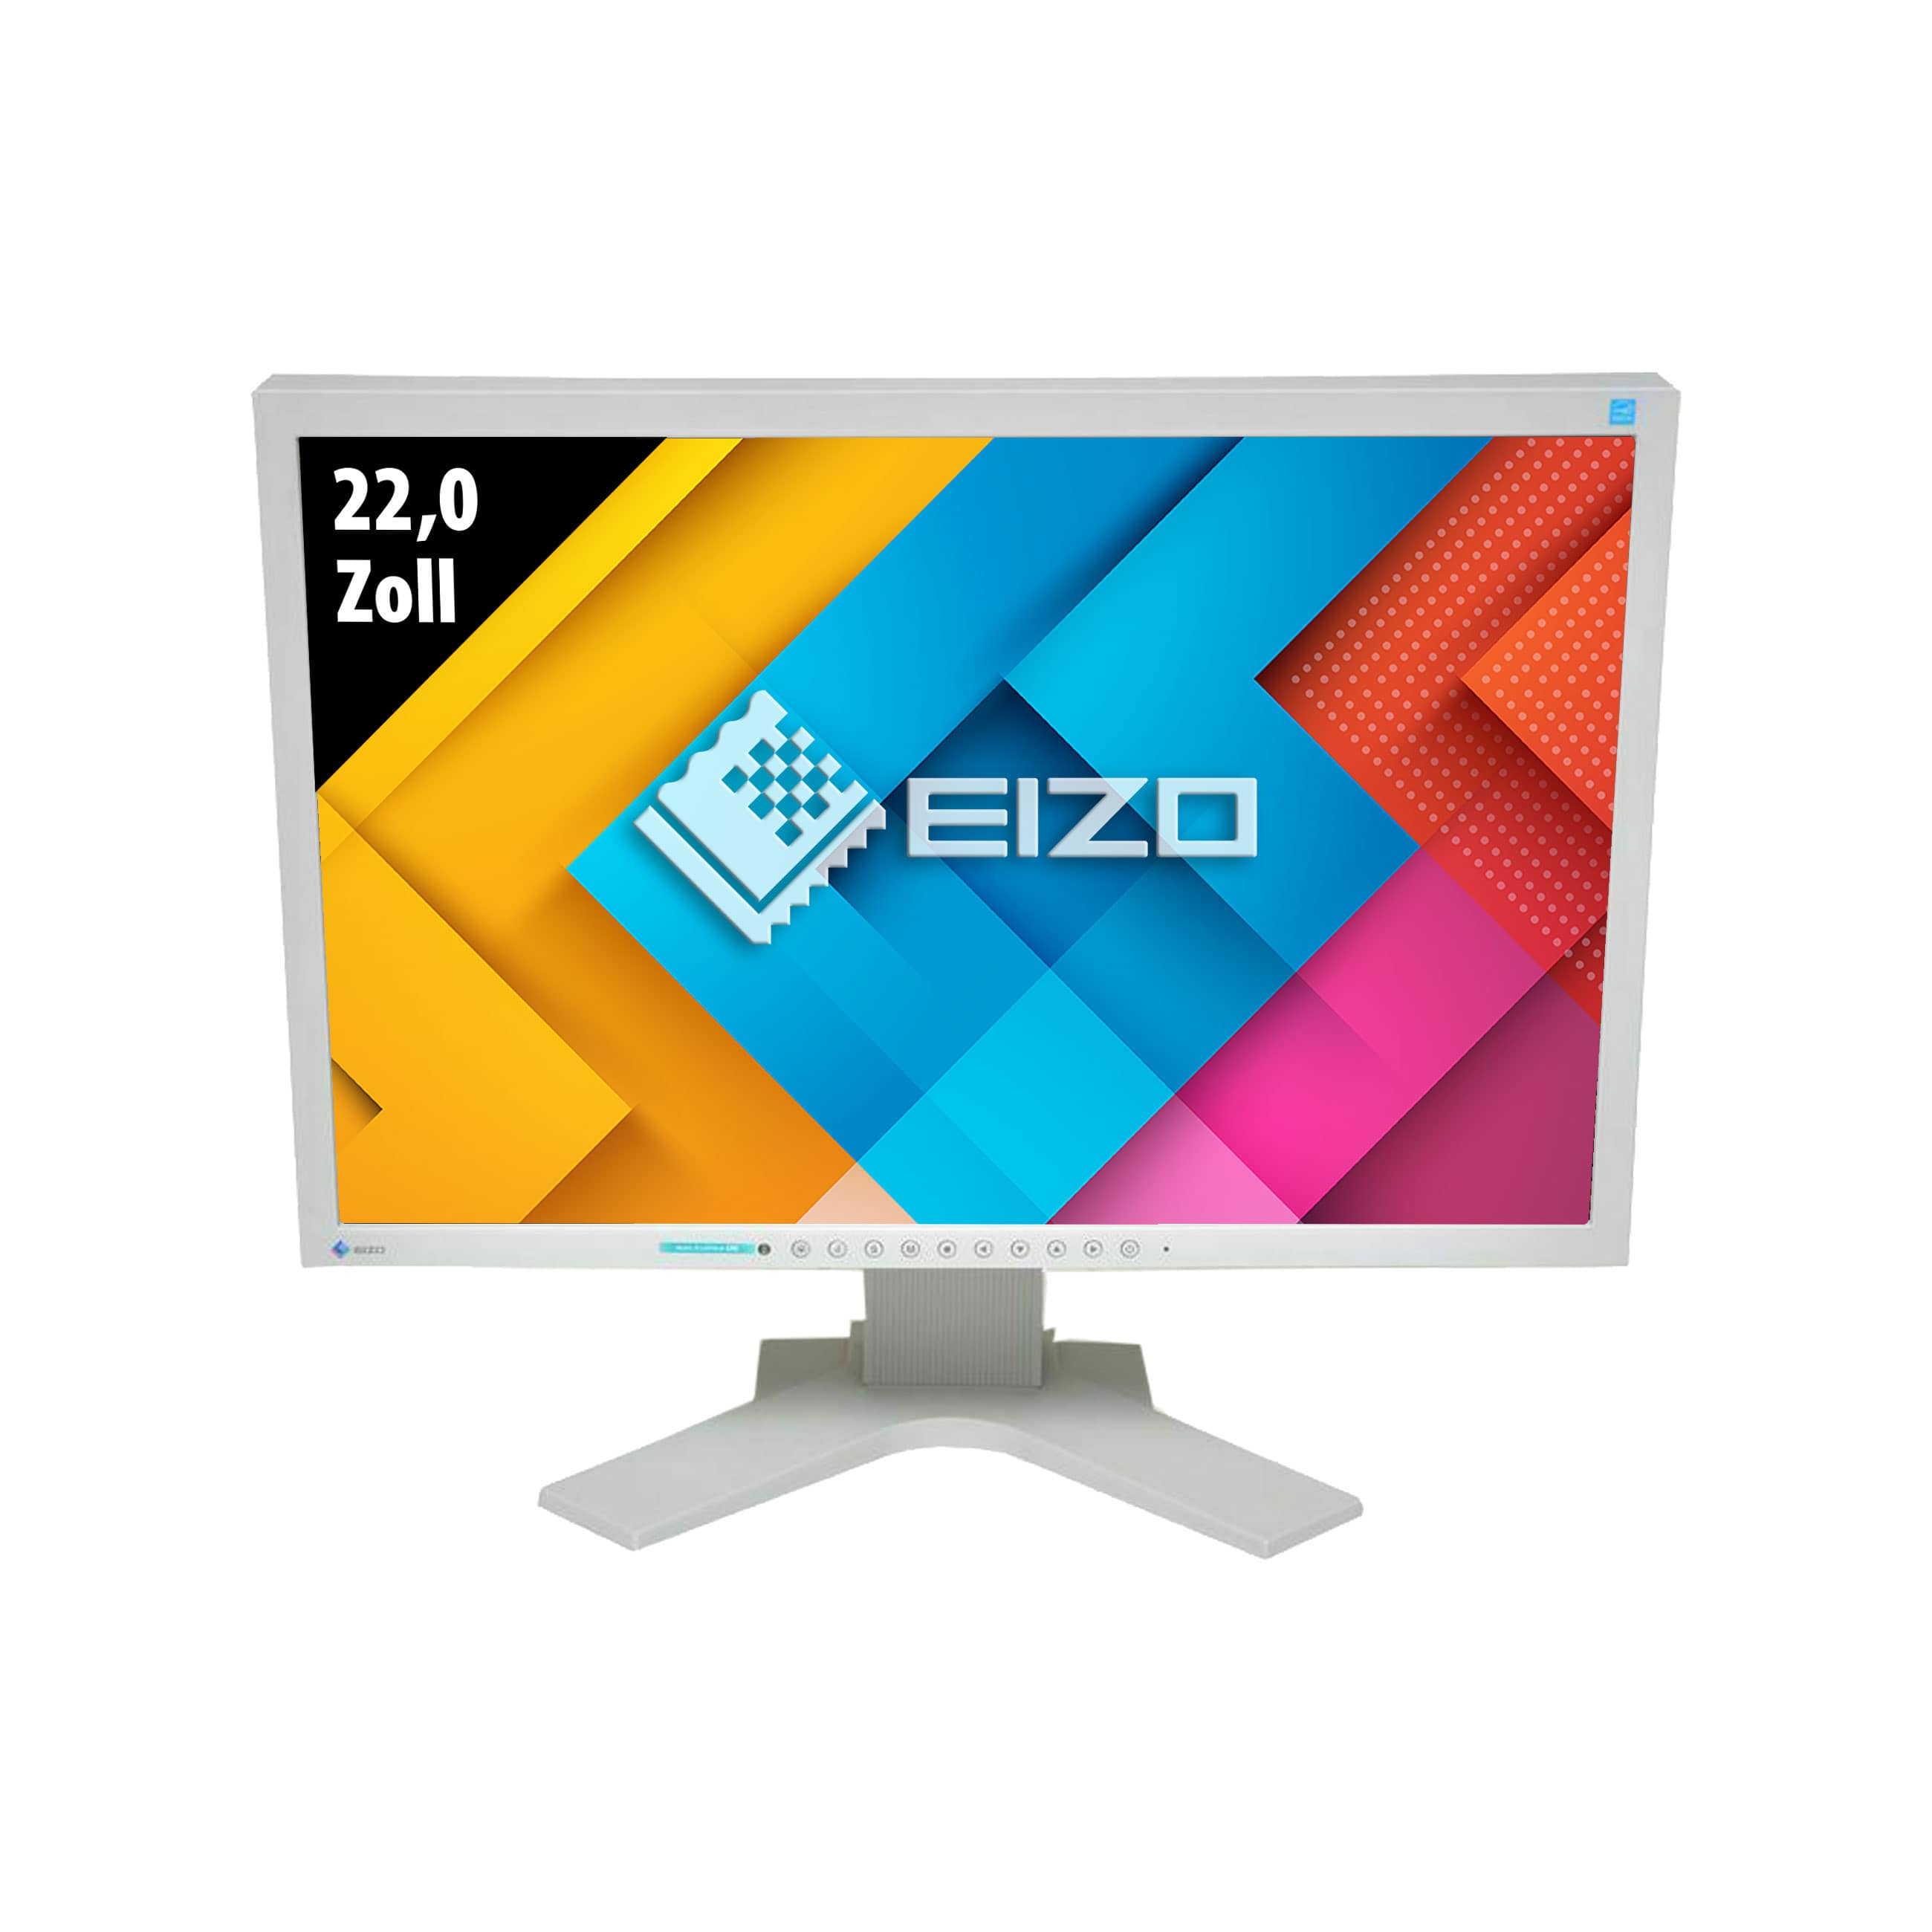 Eizo FlexScan S2202WH-GY - 1680 x 1050 - WSXGA+ - 22,0 Zoll - 5 ms - Grau